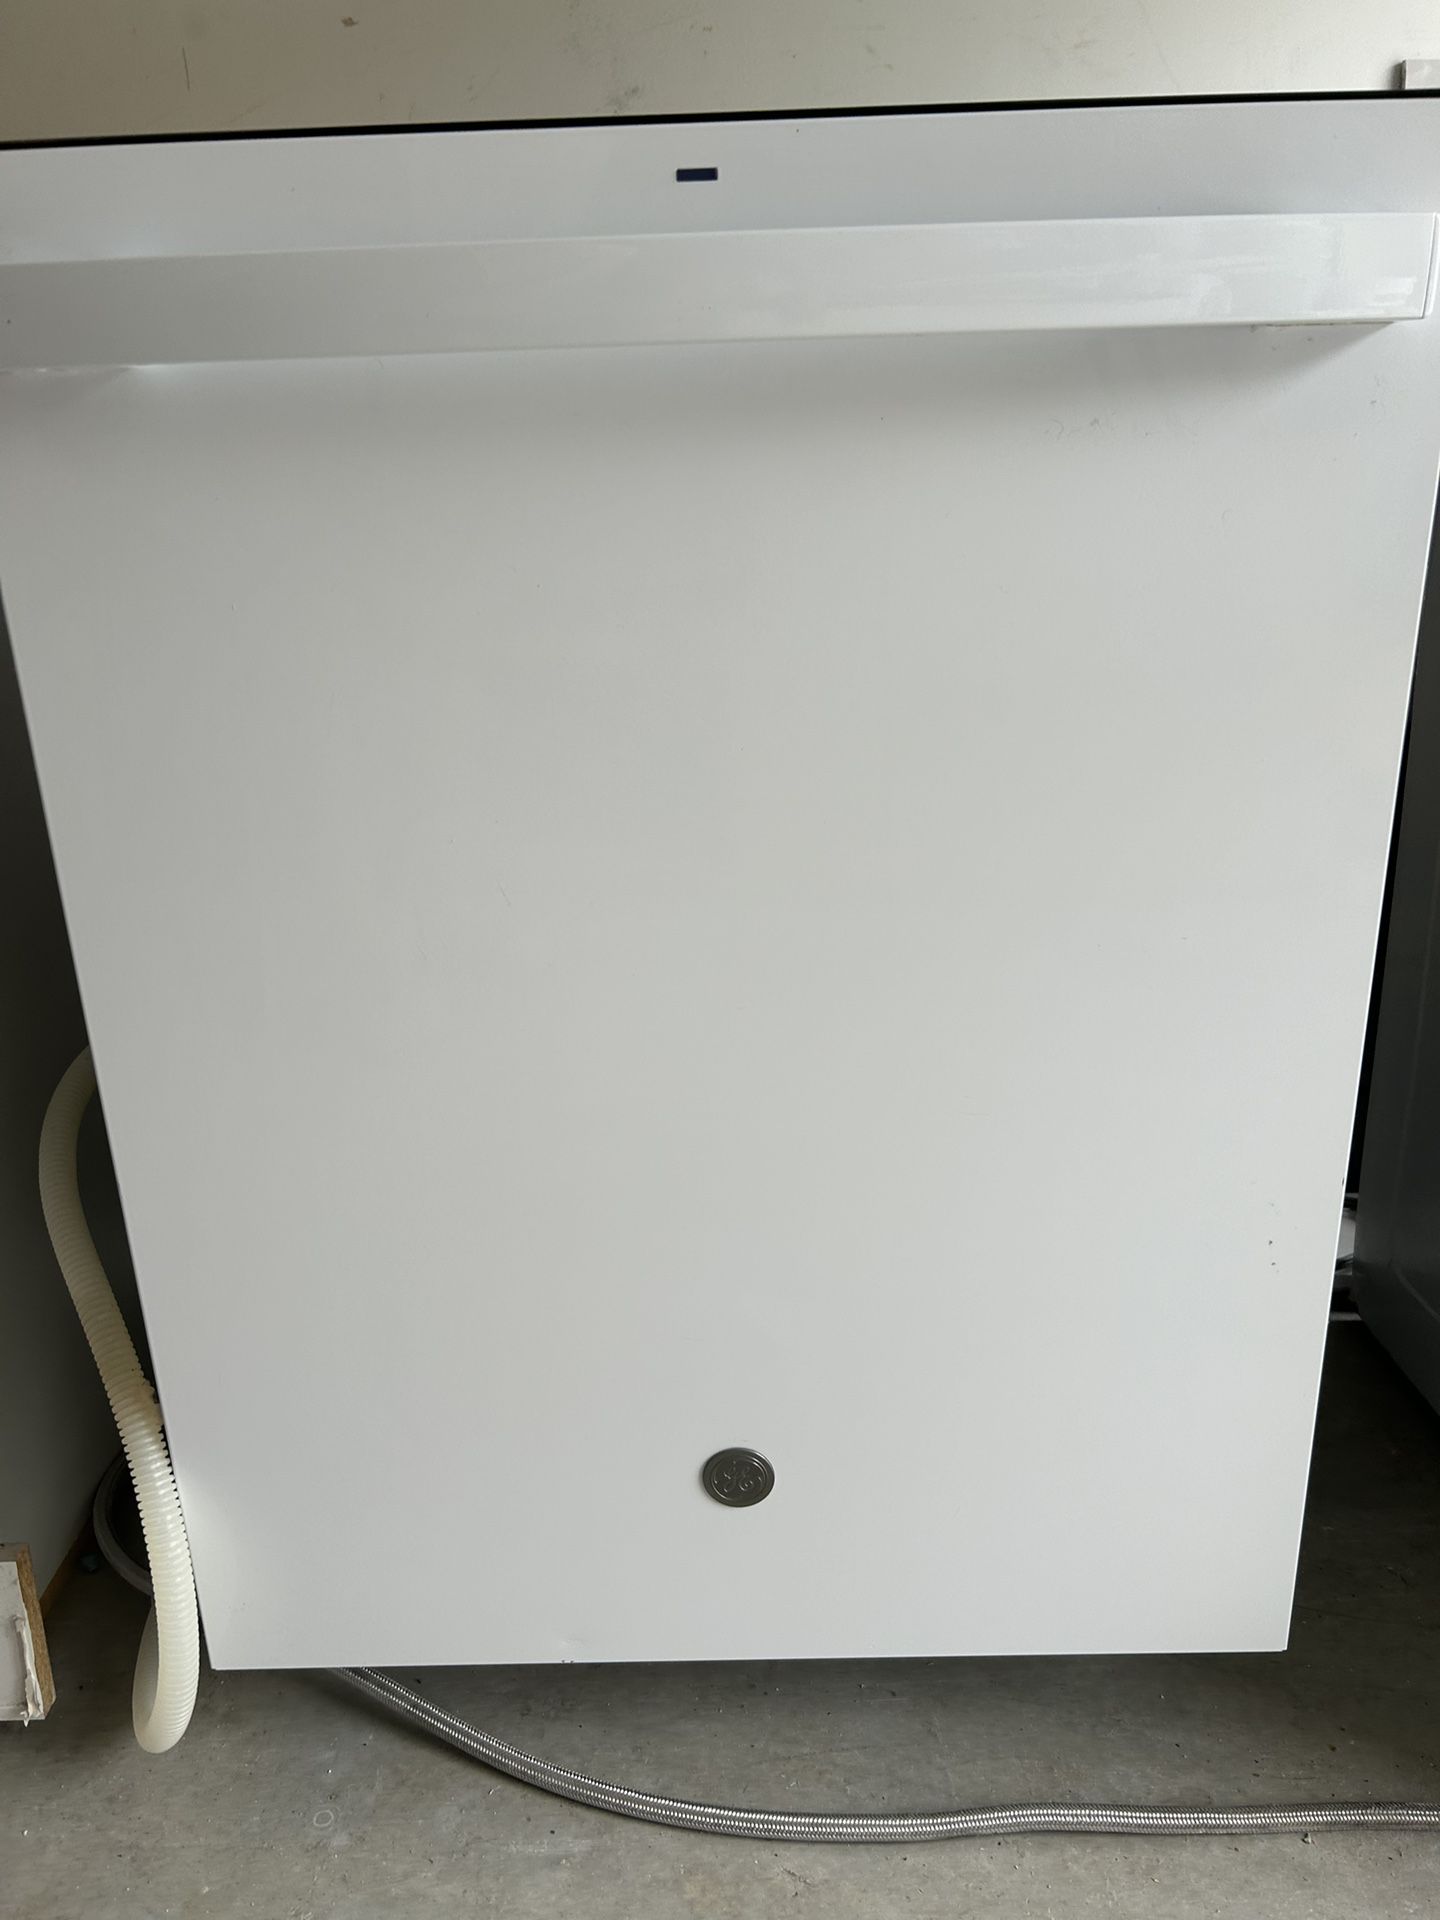 GE Dishwasher  LIKE NEW White Color